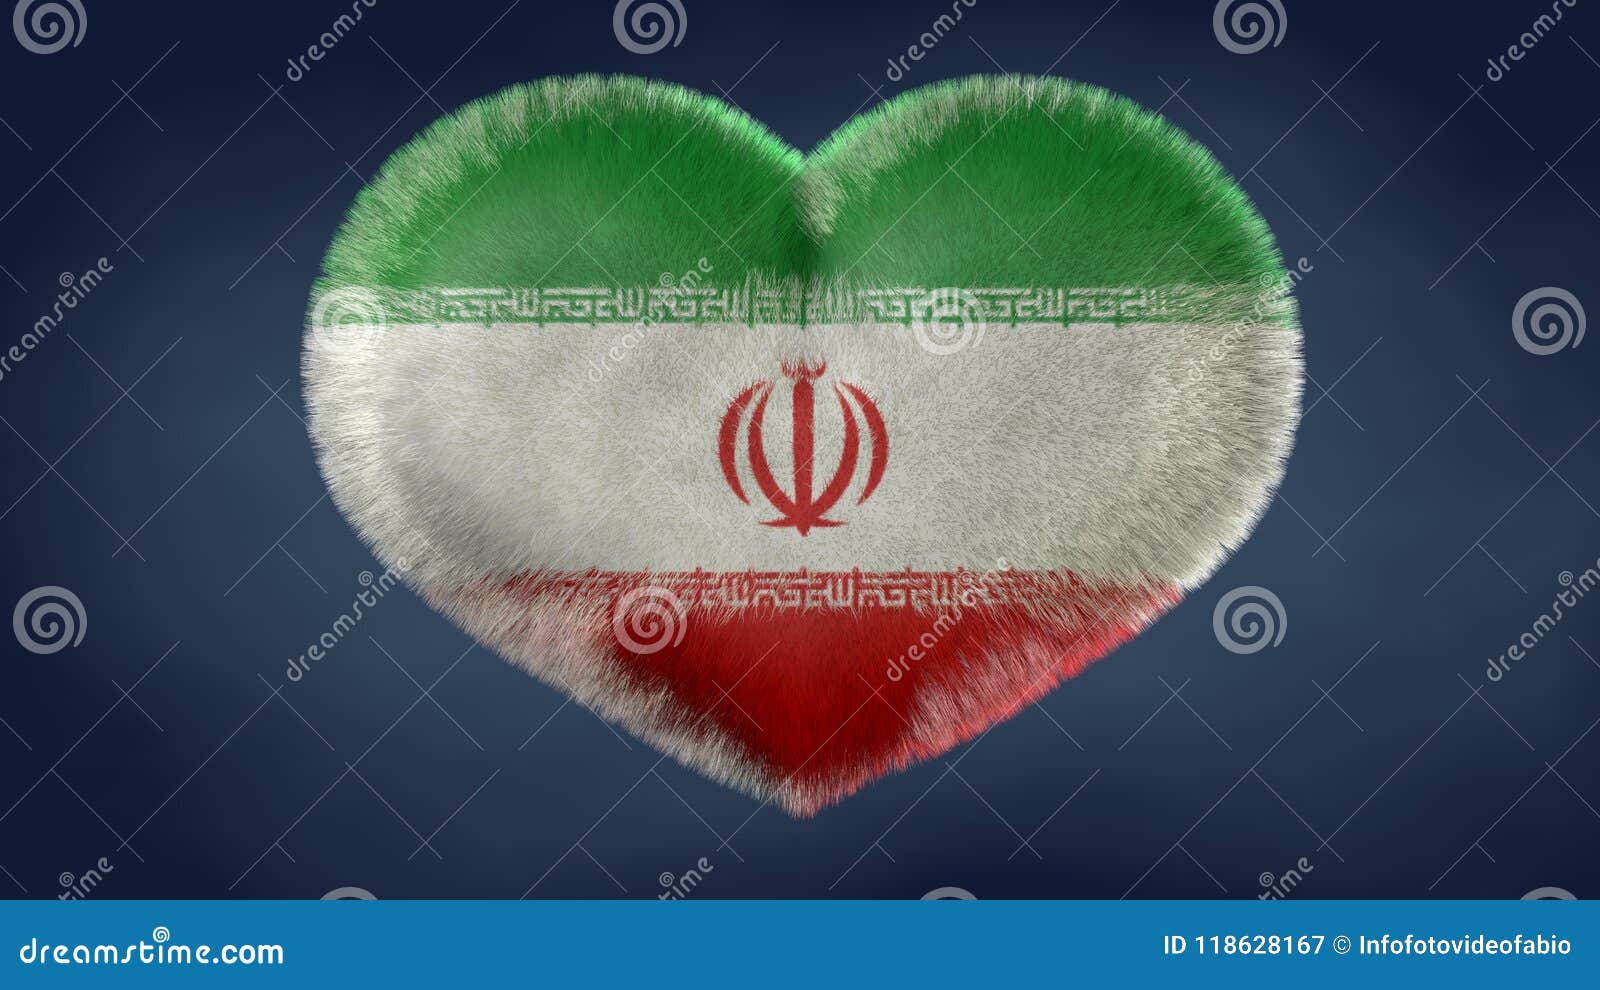 heart of iran flag.